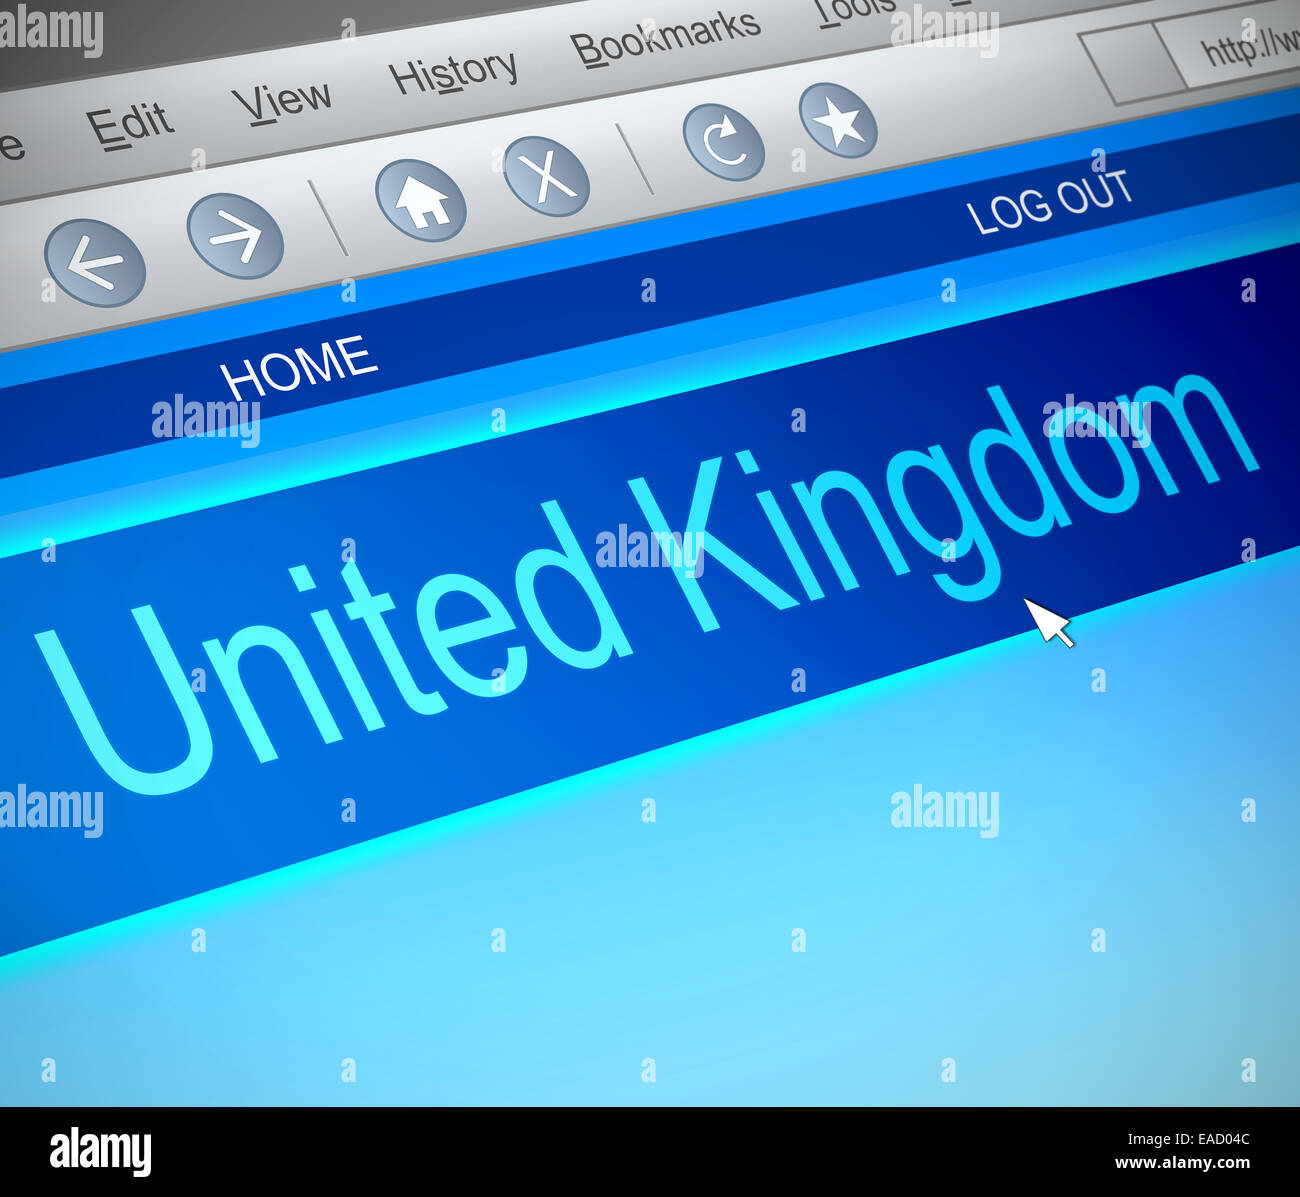 United Kingdom concept. Stock Photo